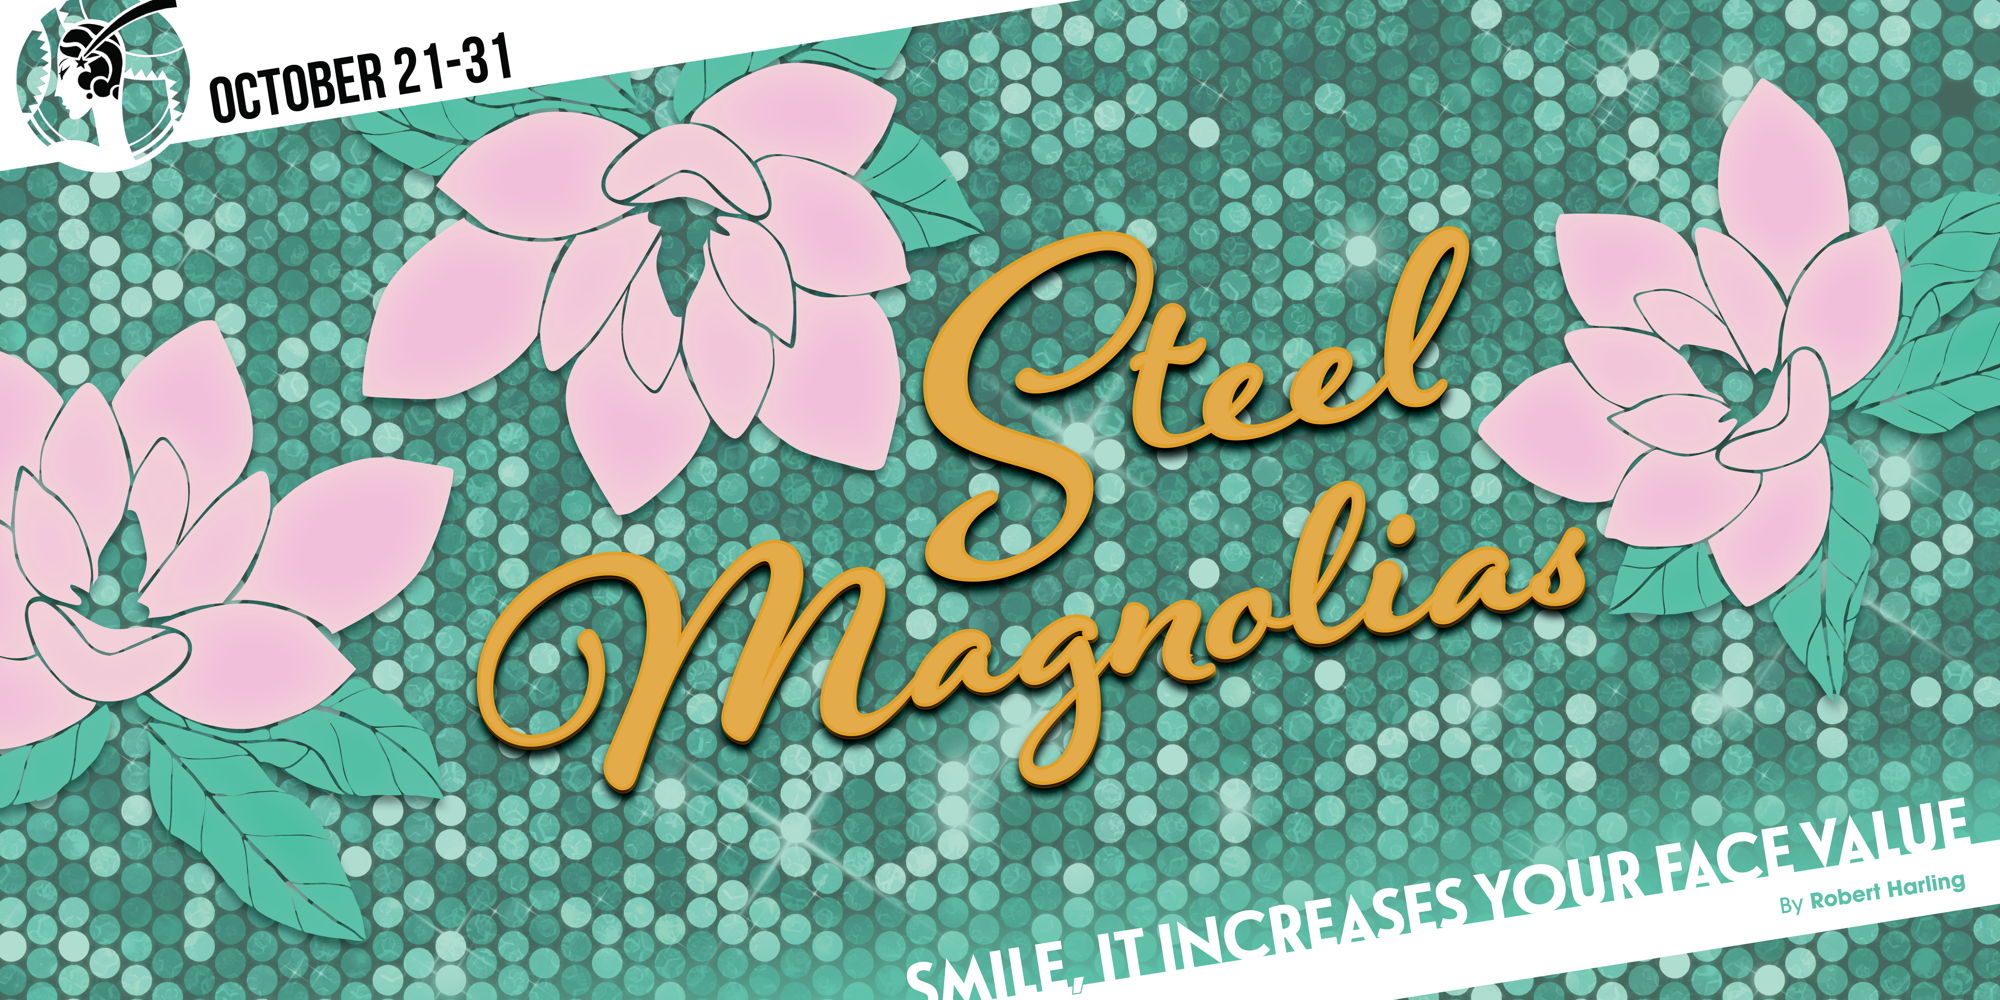 STEEL MAGNOLIAS promotional image